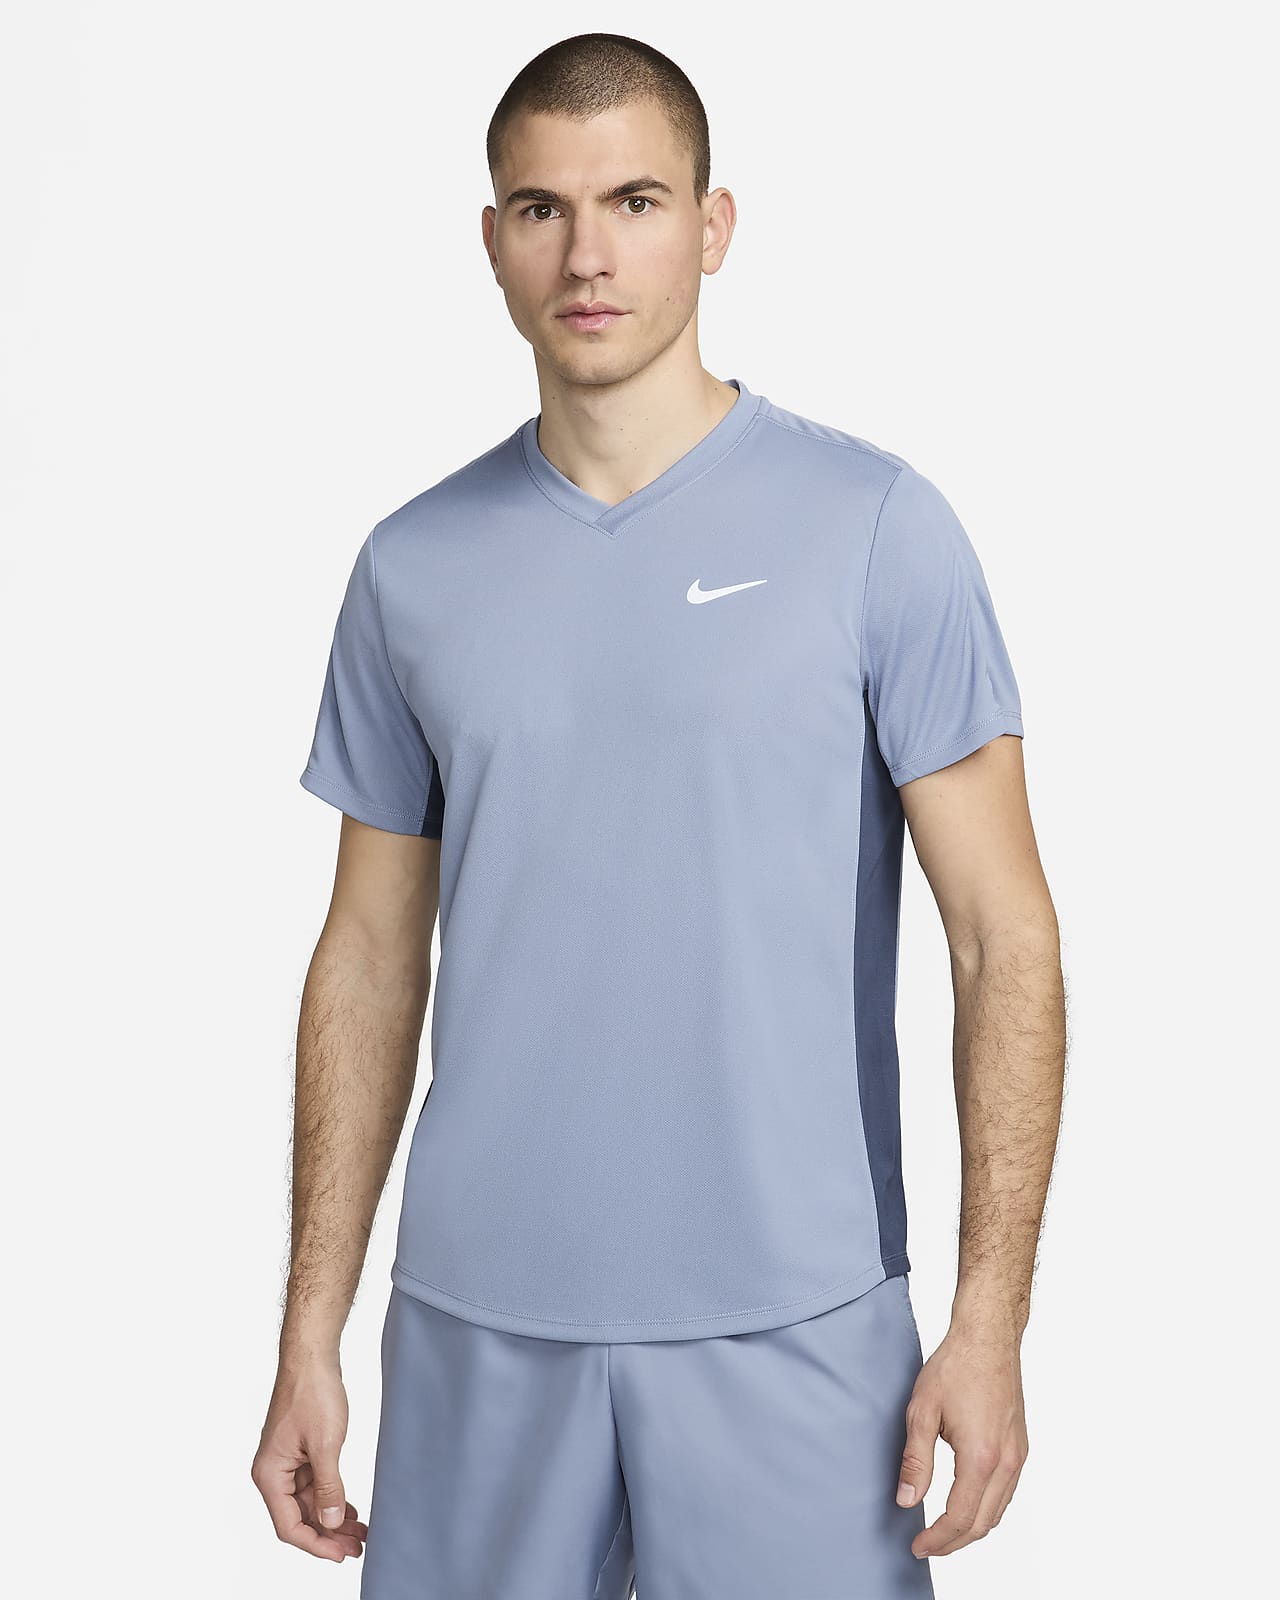 Nike Men's Court Tennis Pants in Purple - ShopStyle